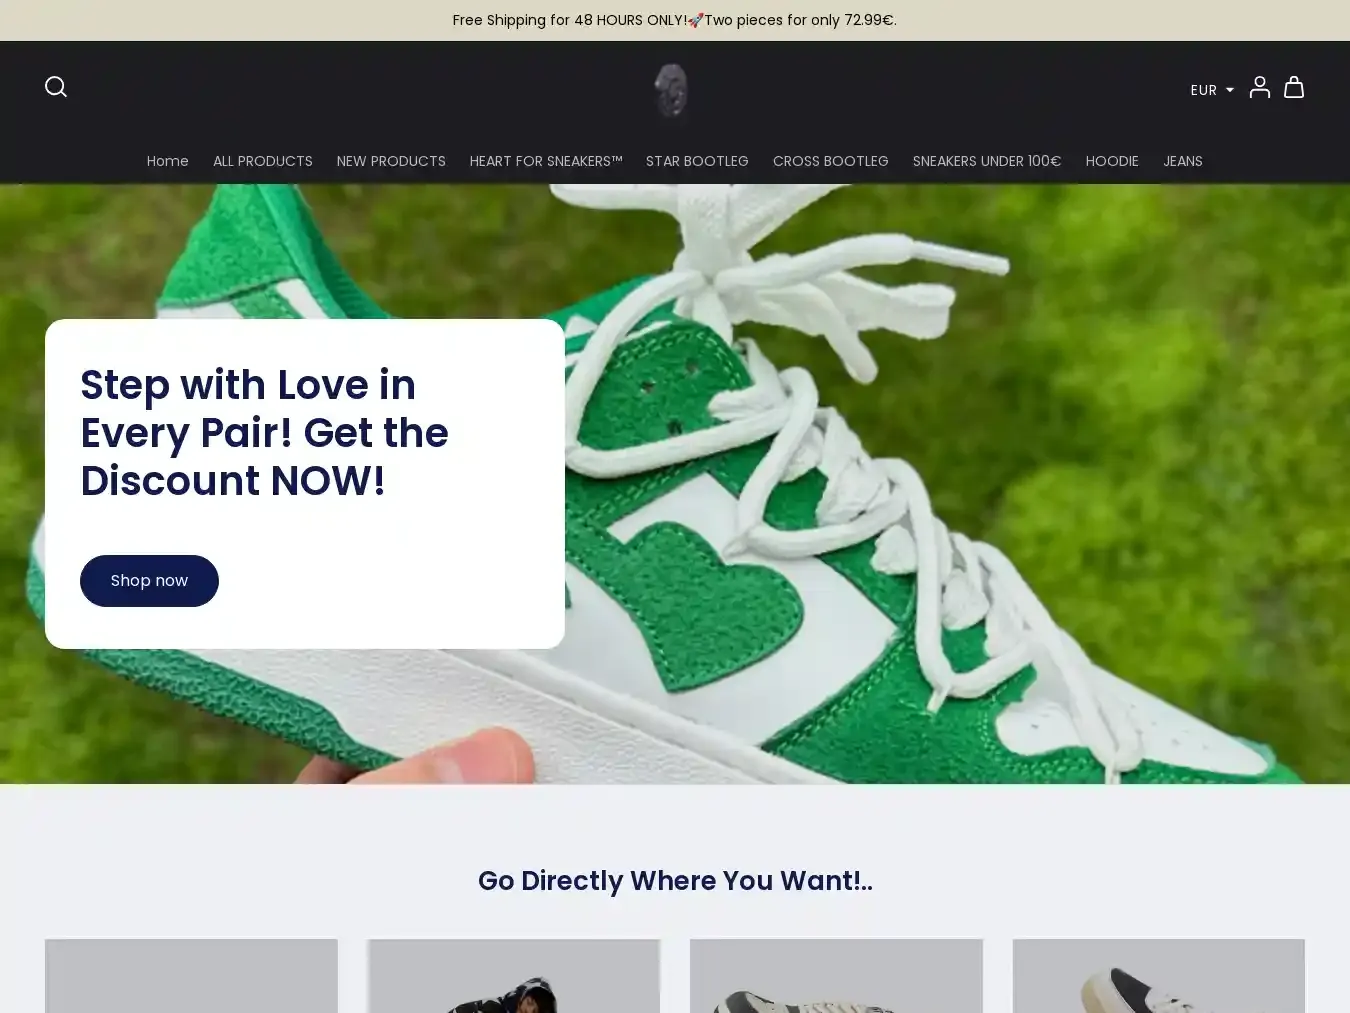 Heartforsneakersinc.com Fraudulent Non-Delivery website.